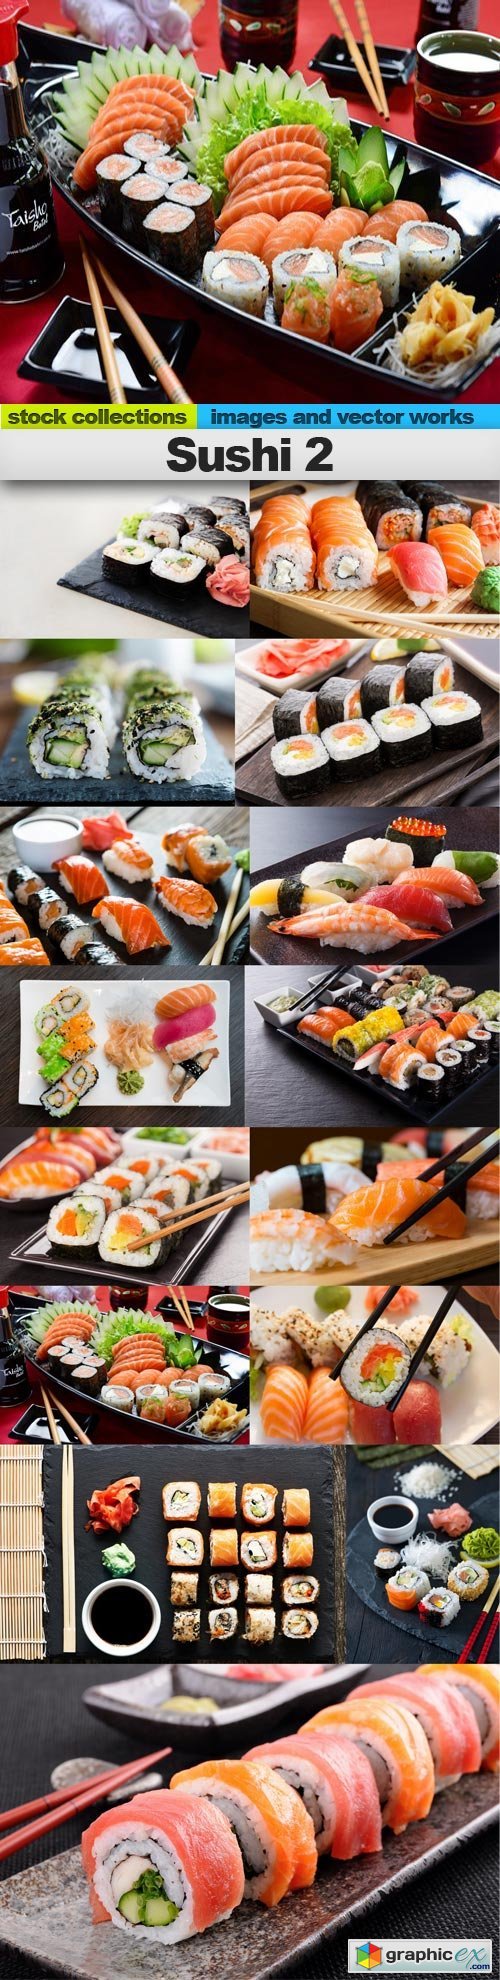 Sushi 2, 15 x UHQ JPEG